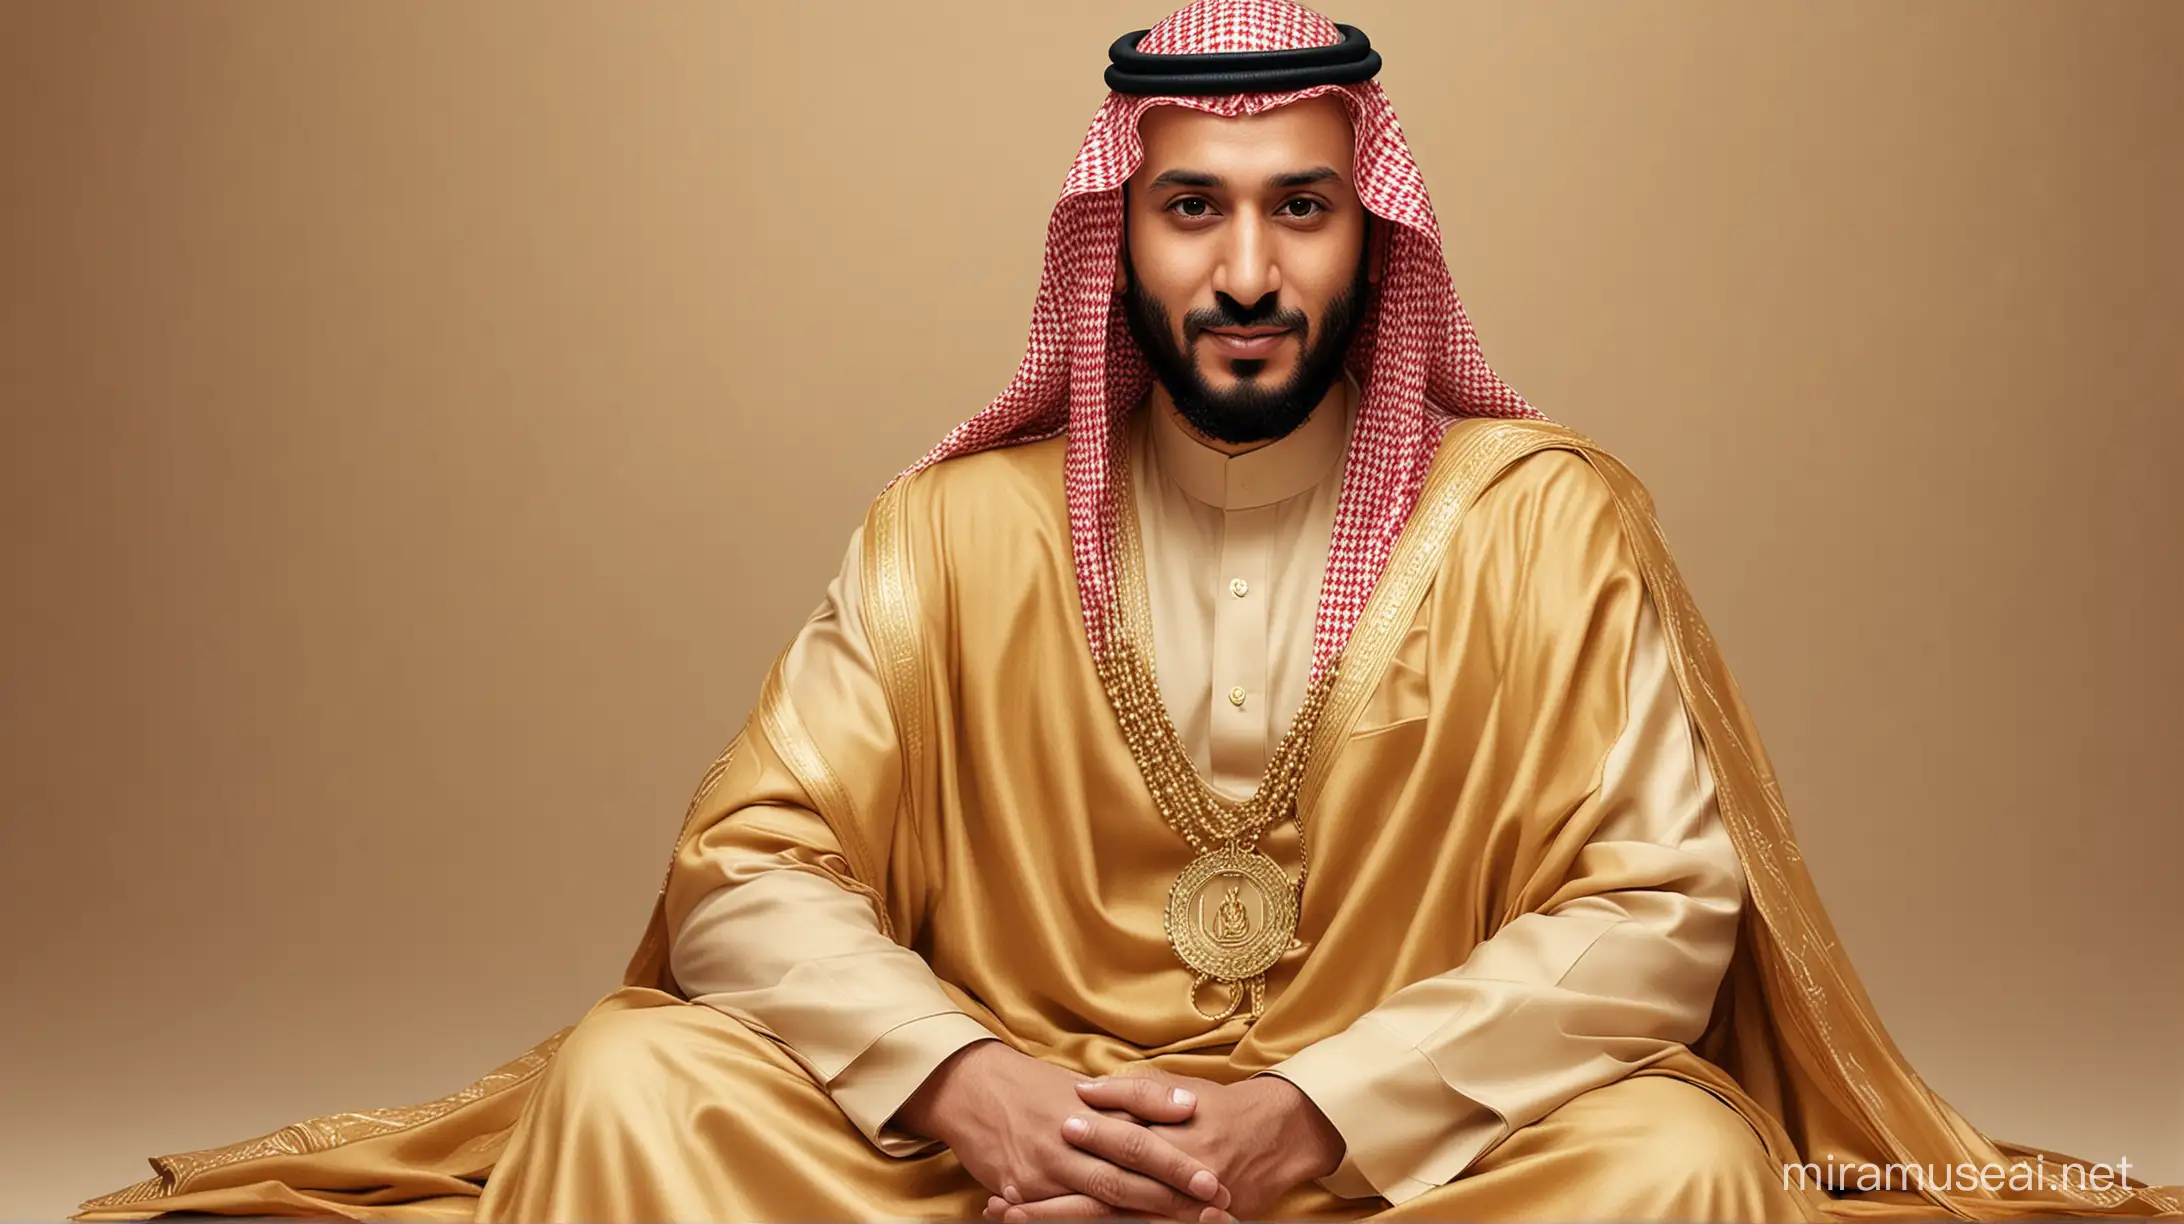 Mohammed bin Salman Al Saud Seated on Opulent Gold Throne